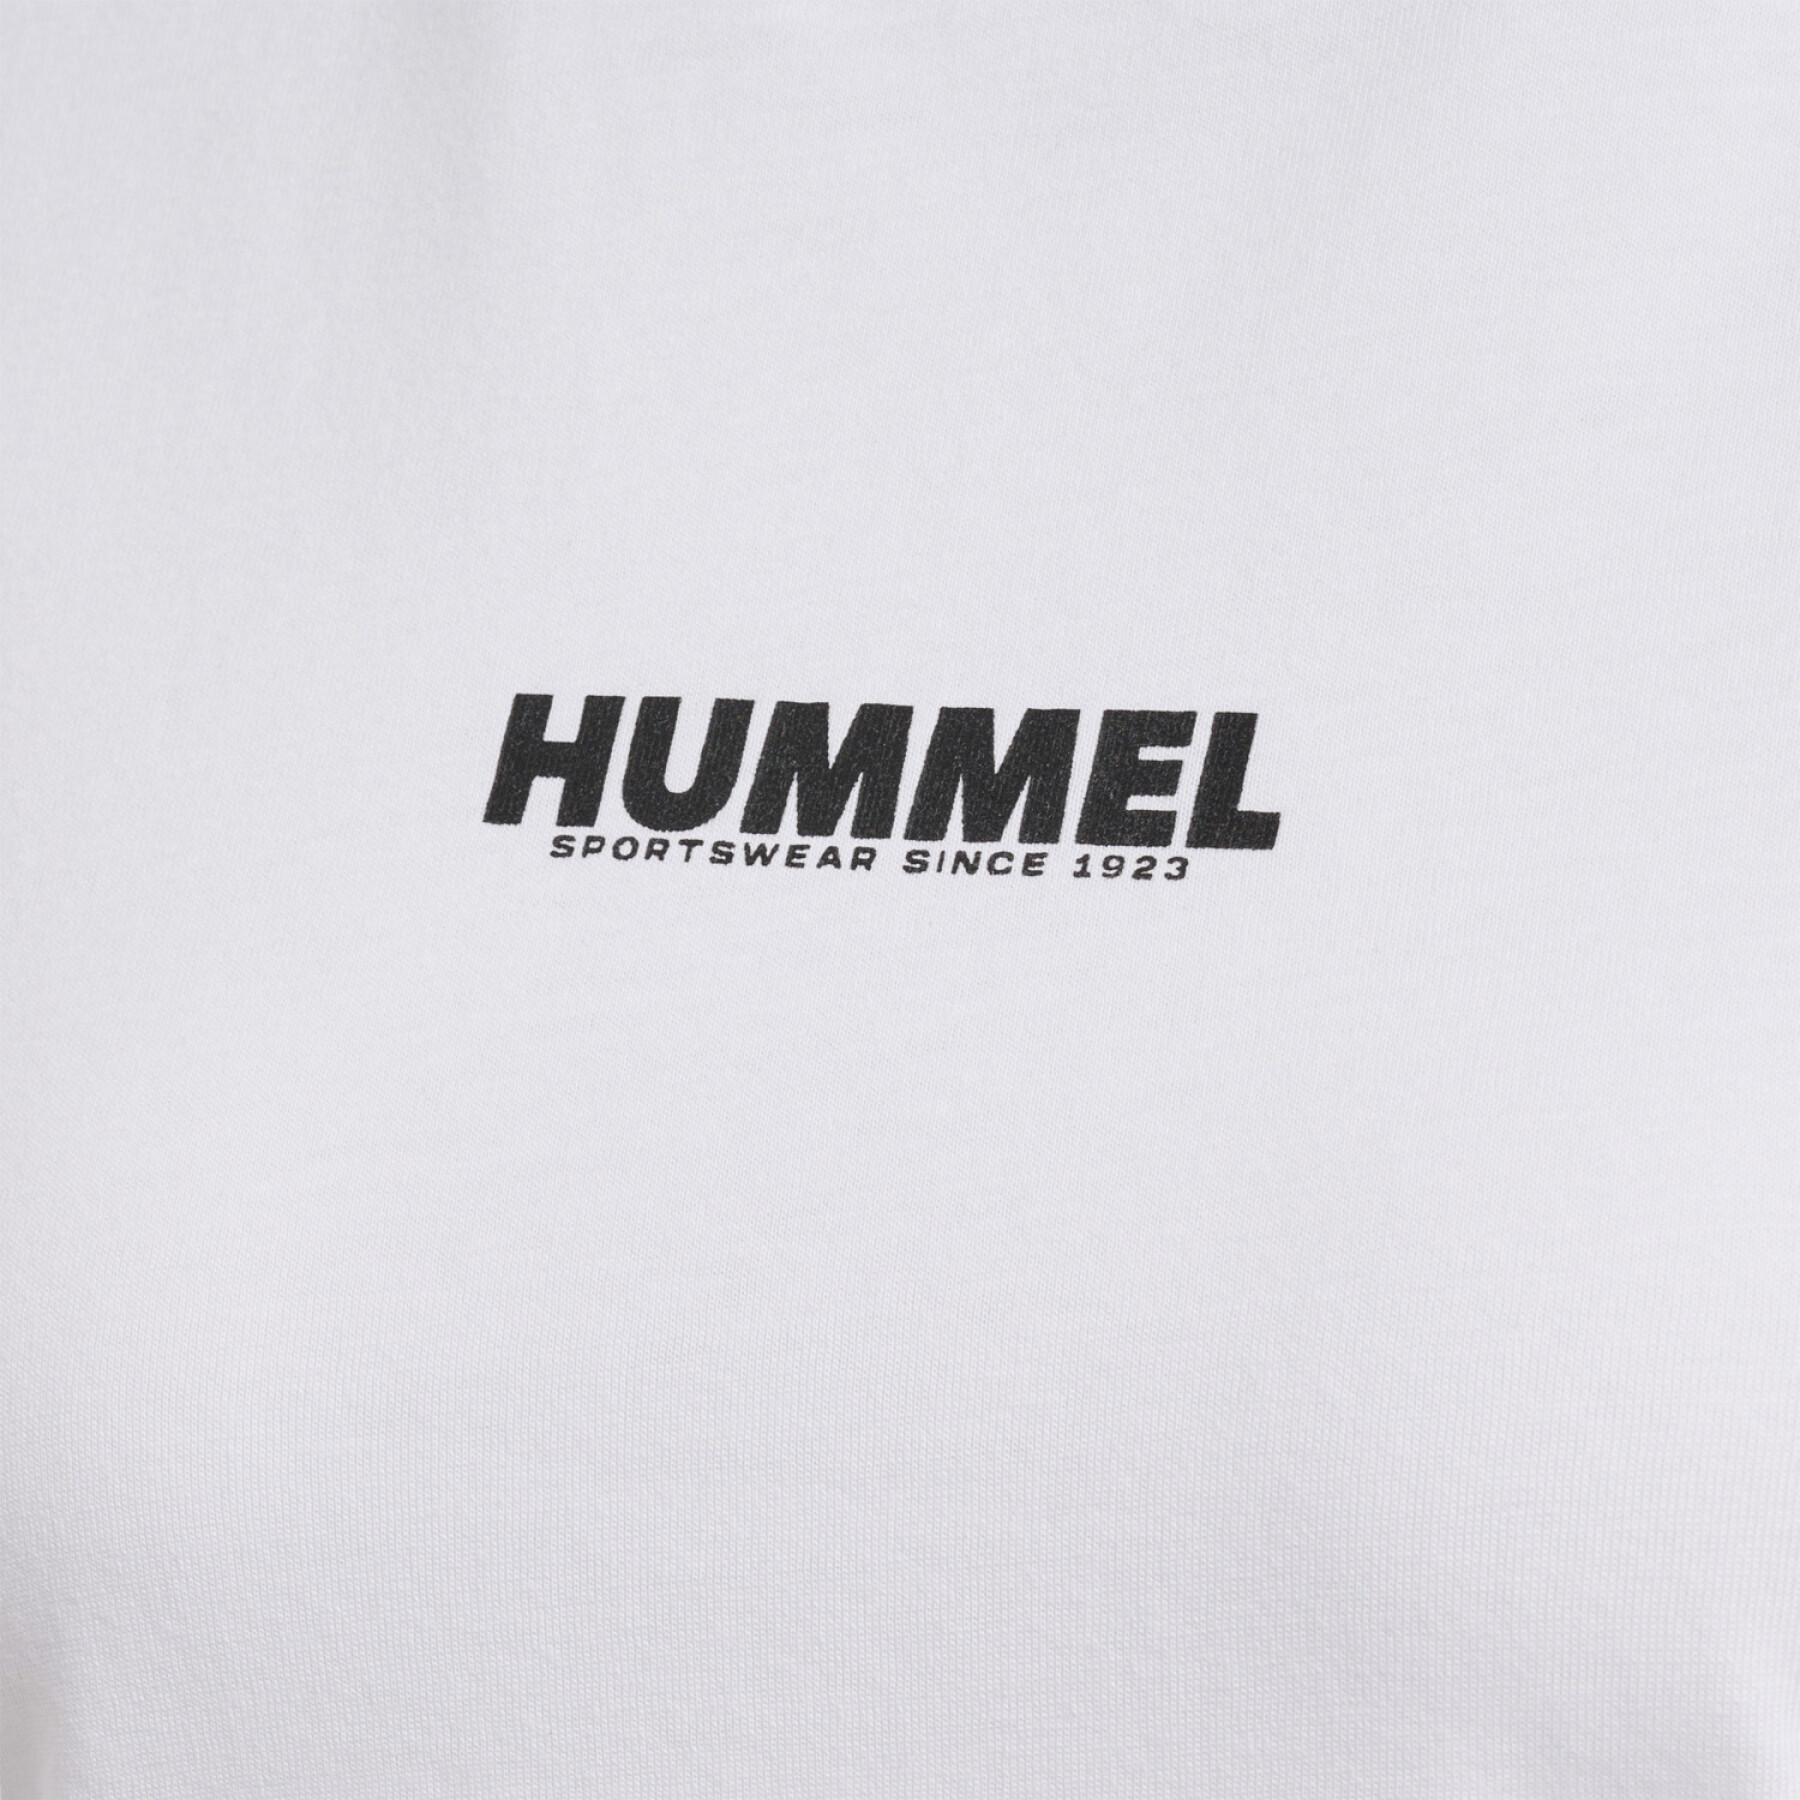 T-shirt femme Hummel Legacy